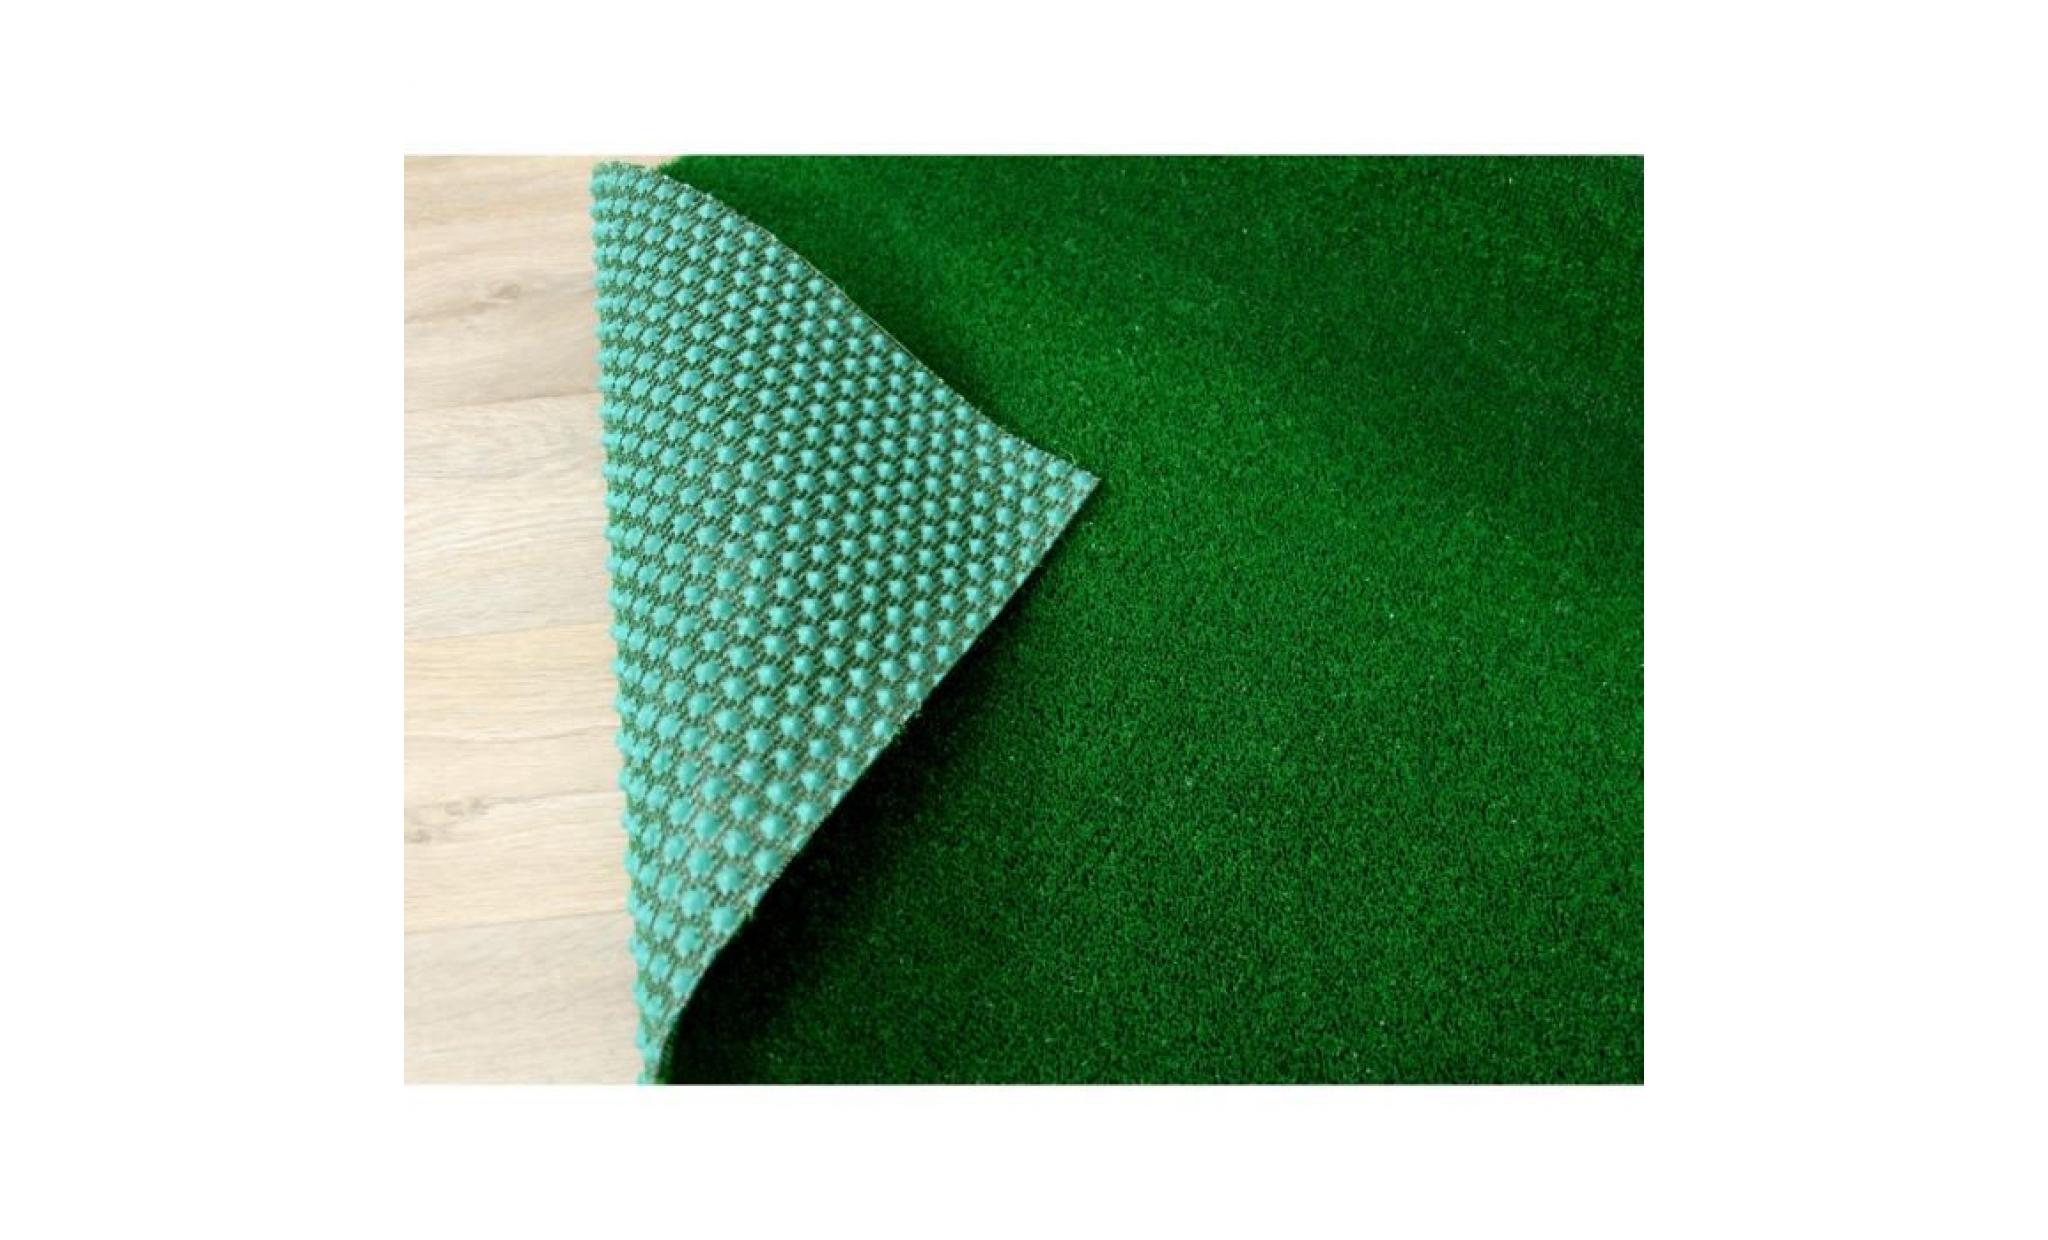 york   tapis type gazon artificiel avec nubs – pour jardin, terrasse, balcon   vert   [200x400 cm] pas cher